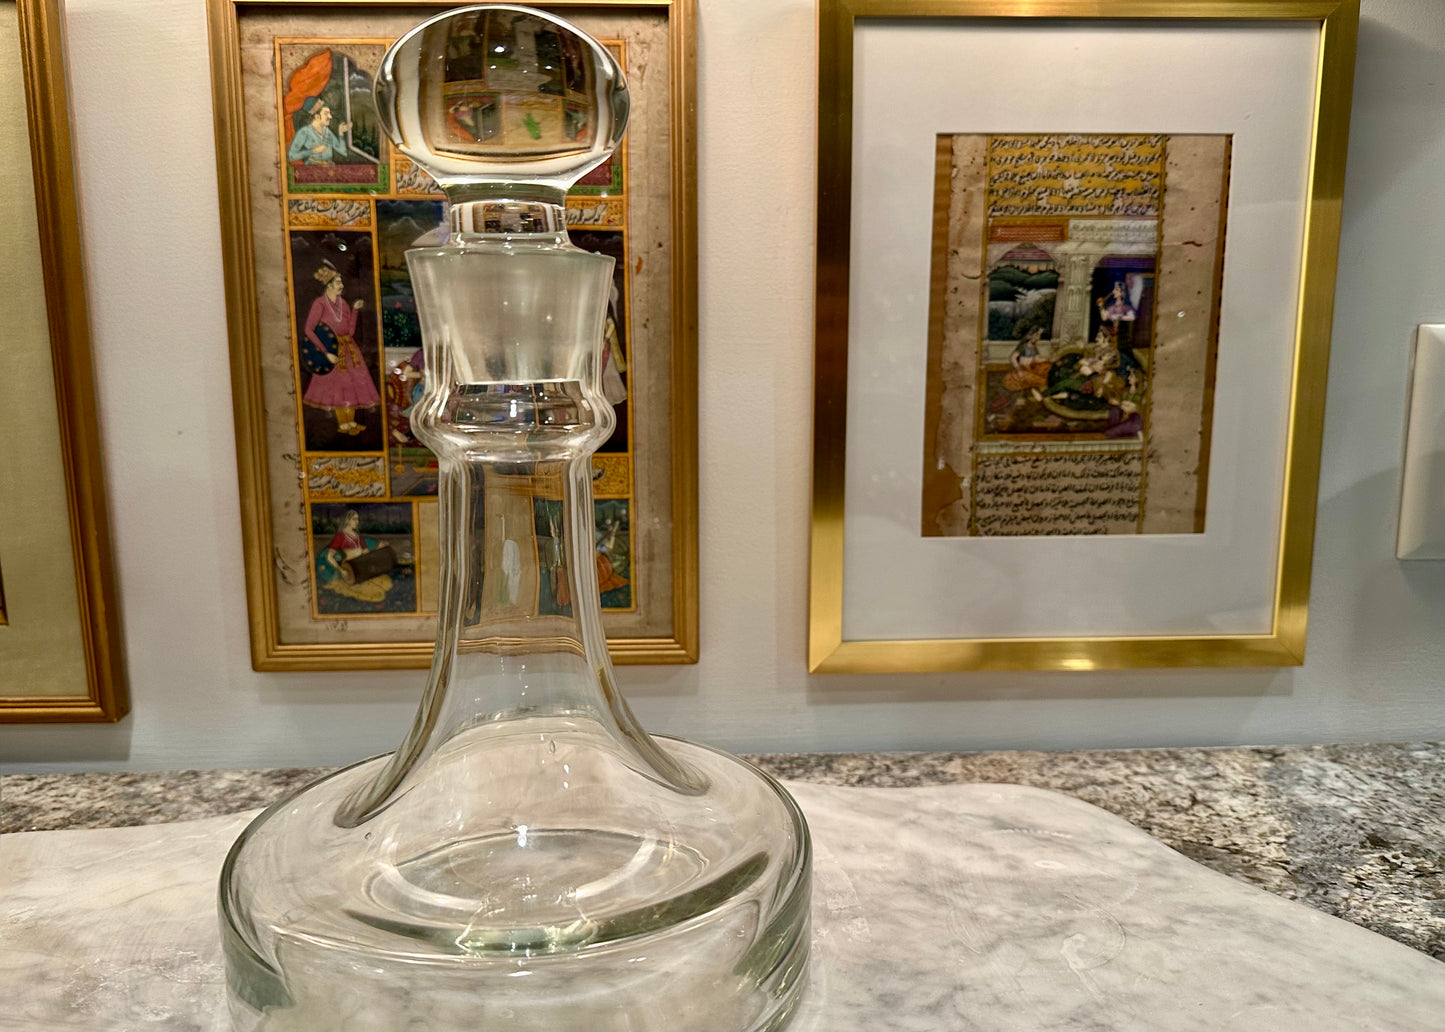 Pair of heavy art deco crystal decanters - DharBazaar